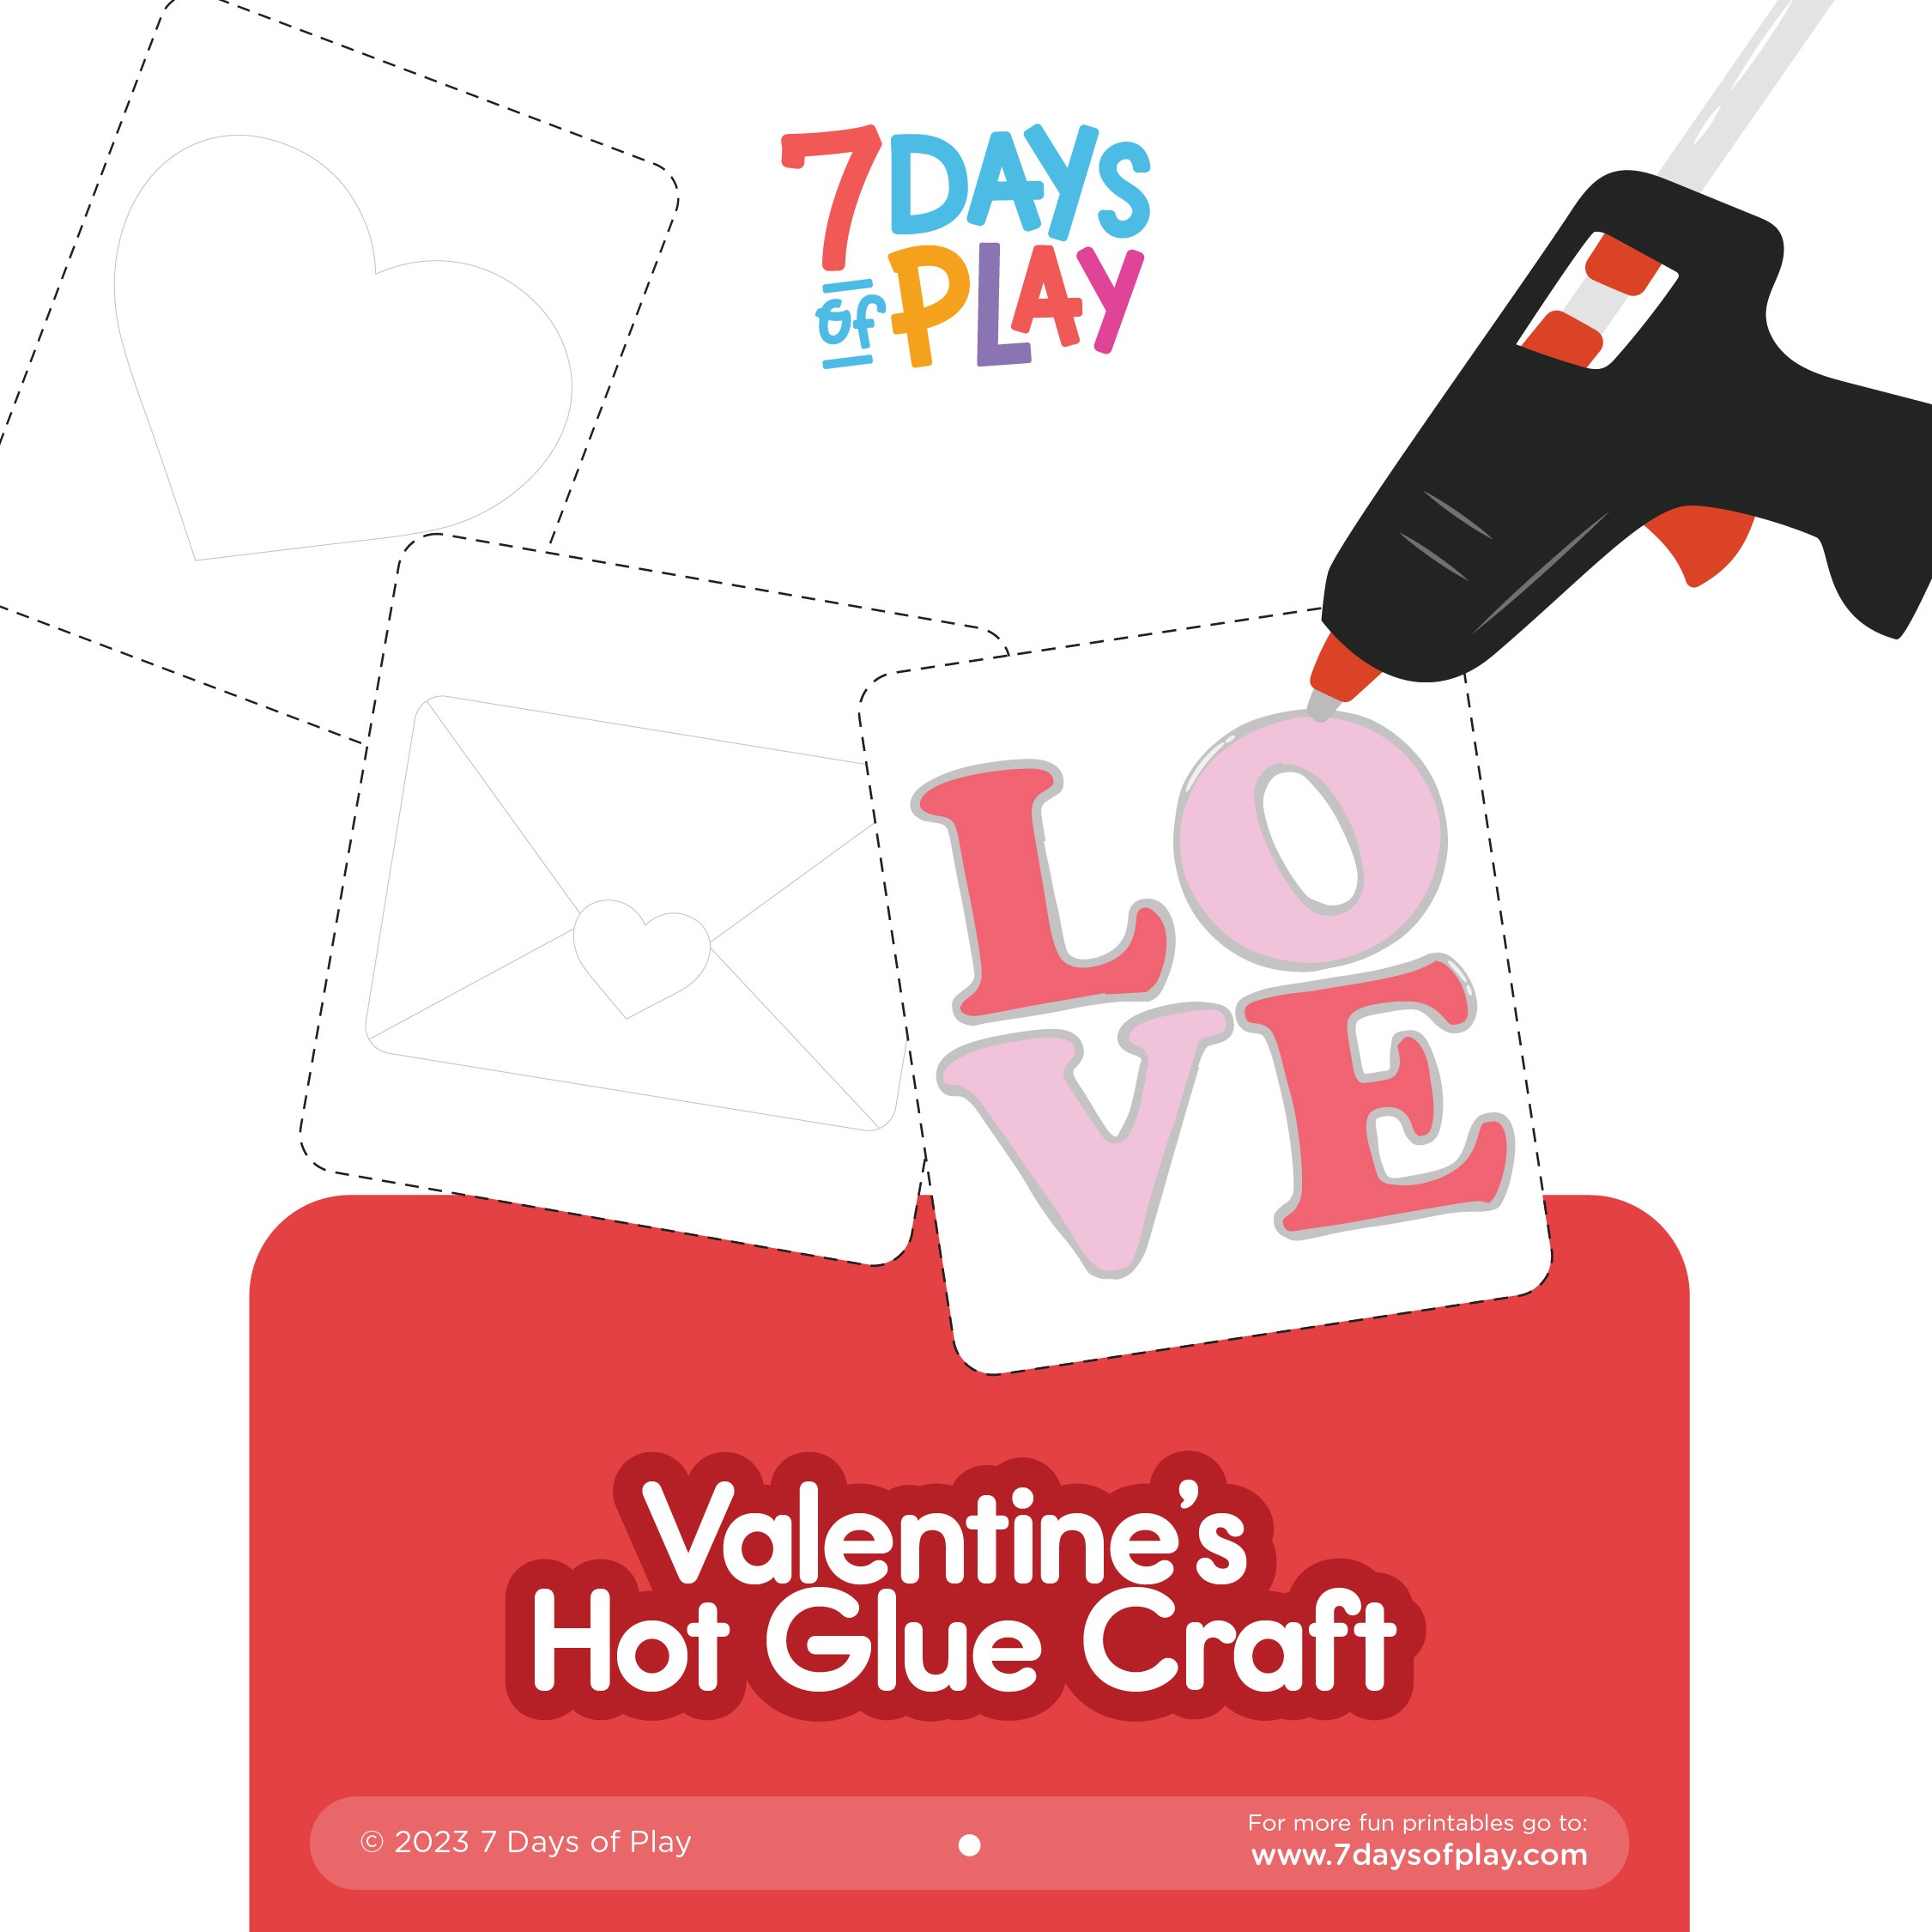 Valentine’s Hot Glue Craft - Printable